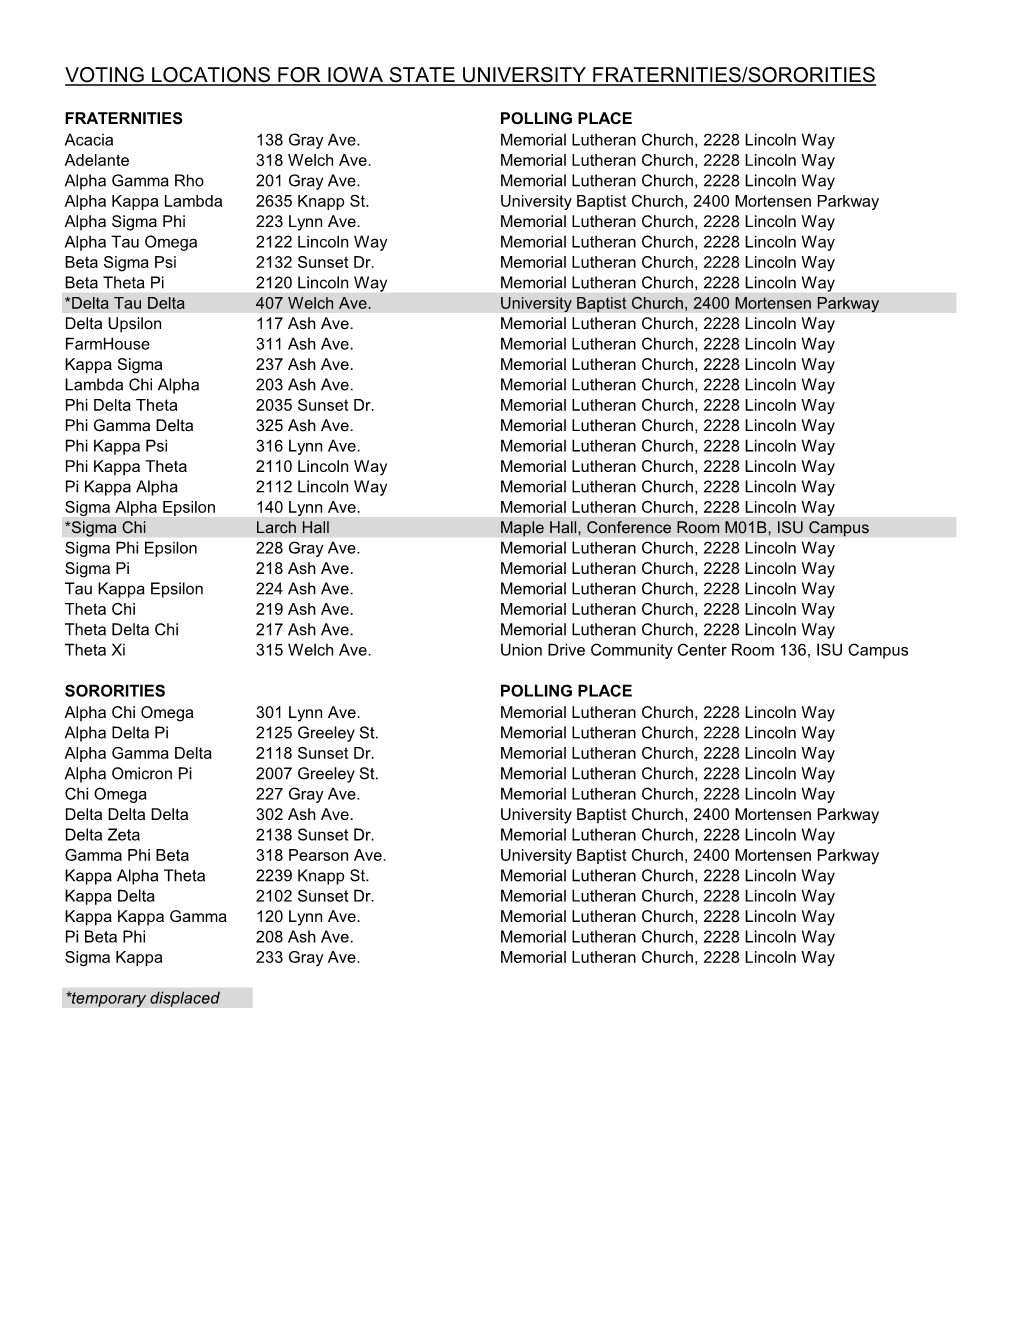 Voting Locations for Iowa State University Fraternities/Sororities